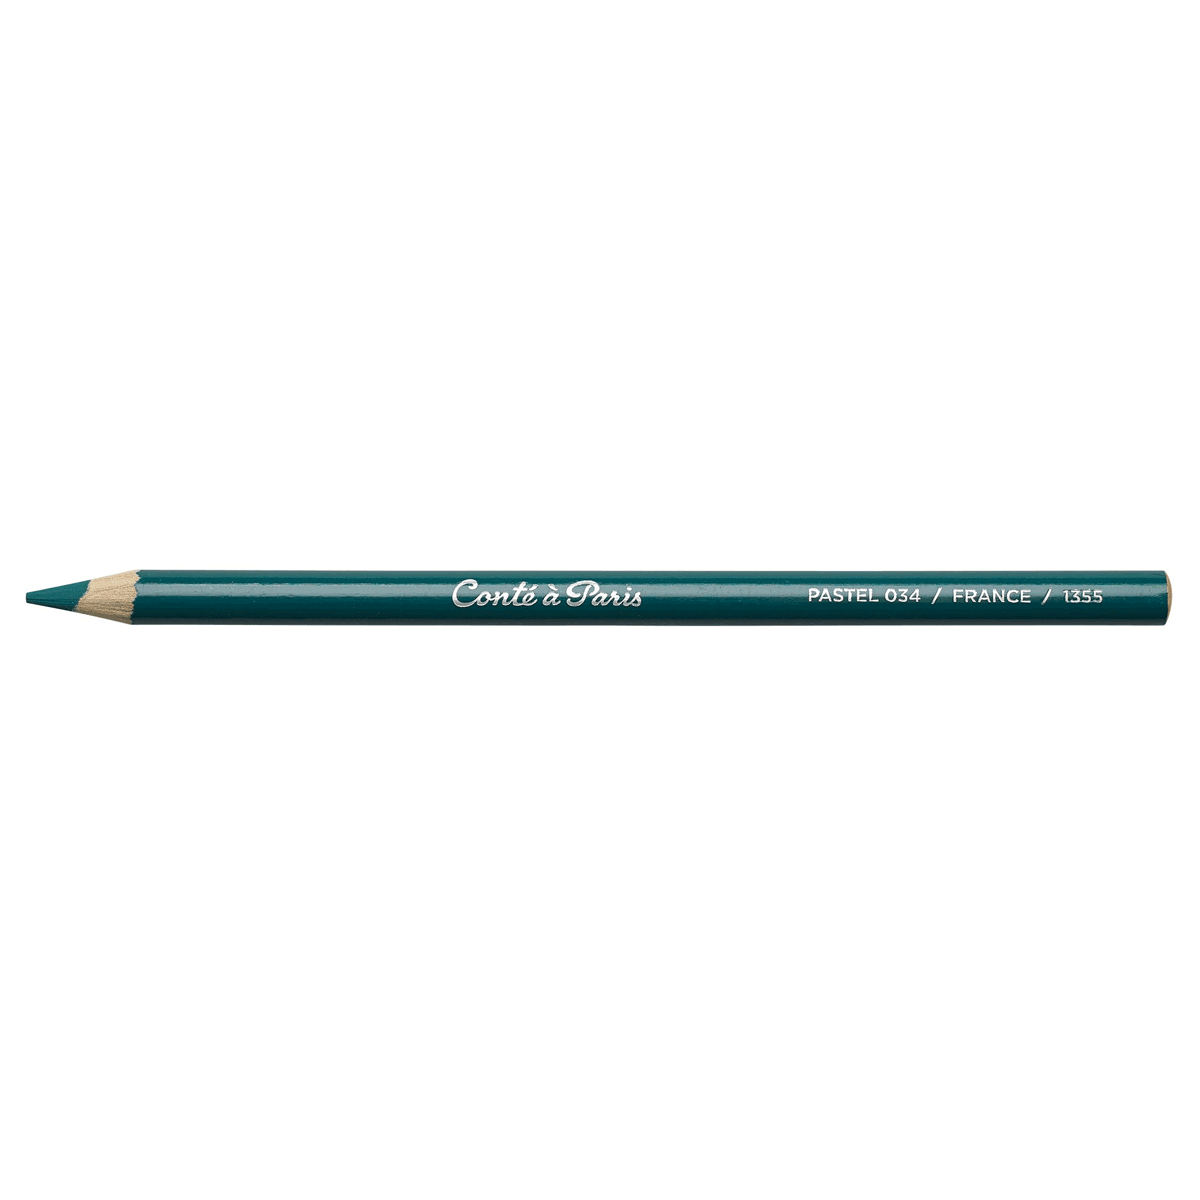 Conte Pastel Pencil - Emerald Green - 034